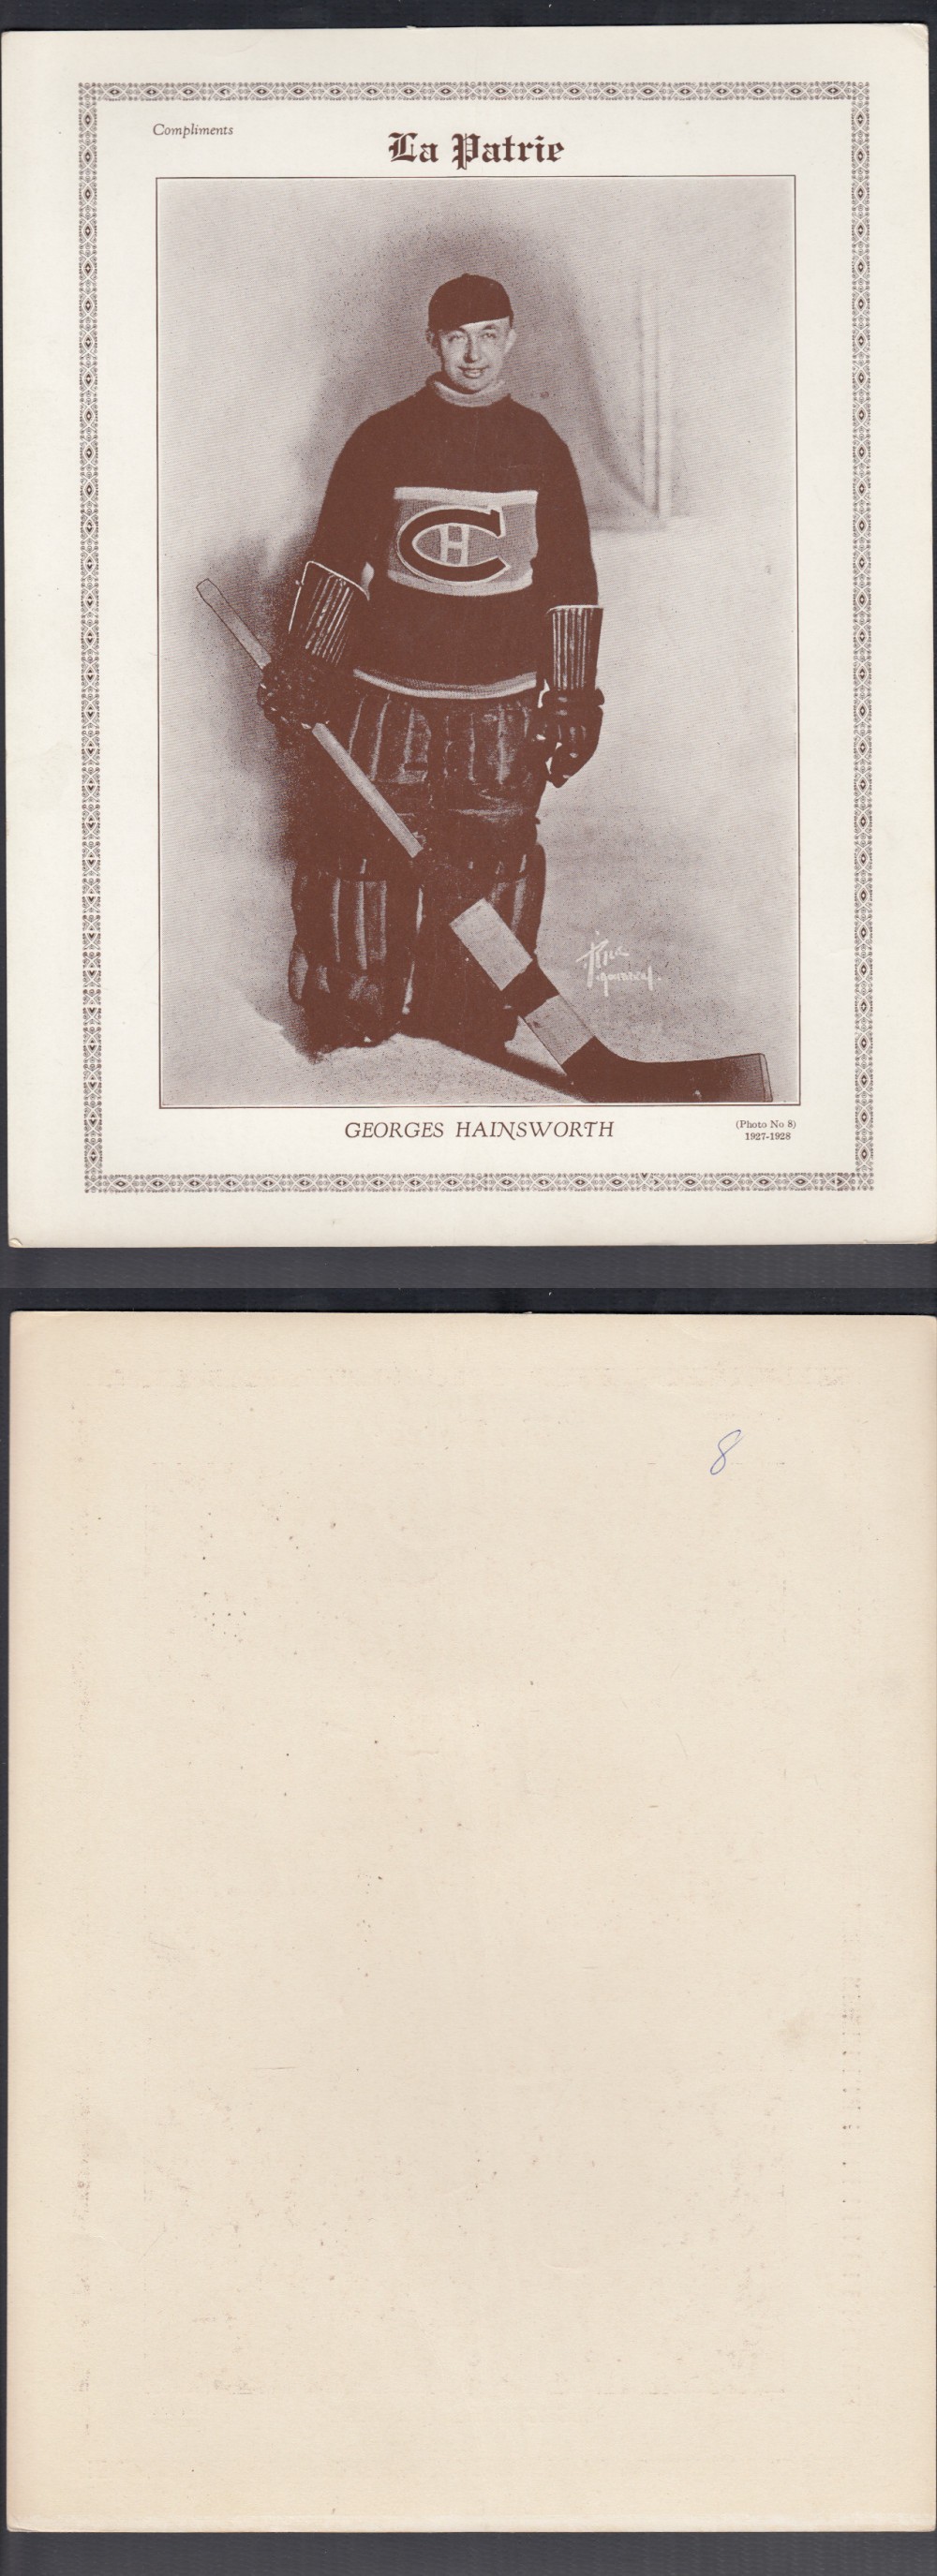 1927-28 LA PATRIE PHOTO #8 G. HAINSWORTH photo